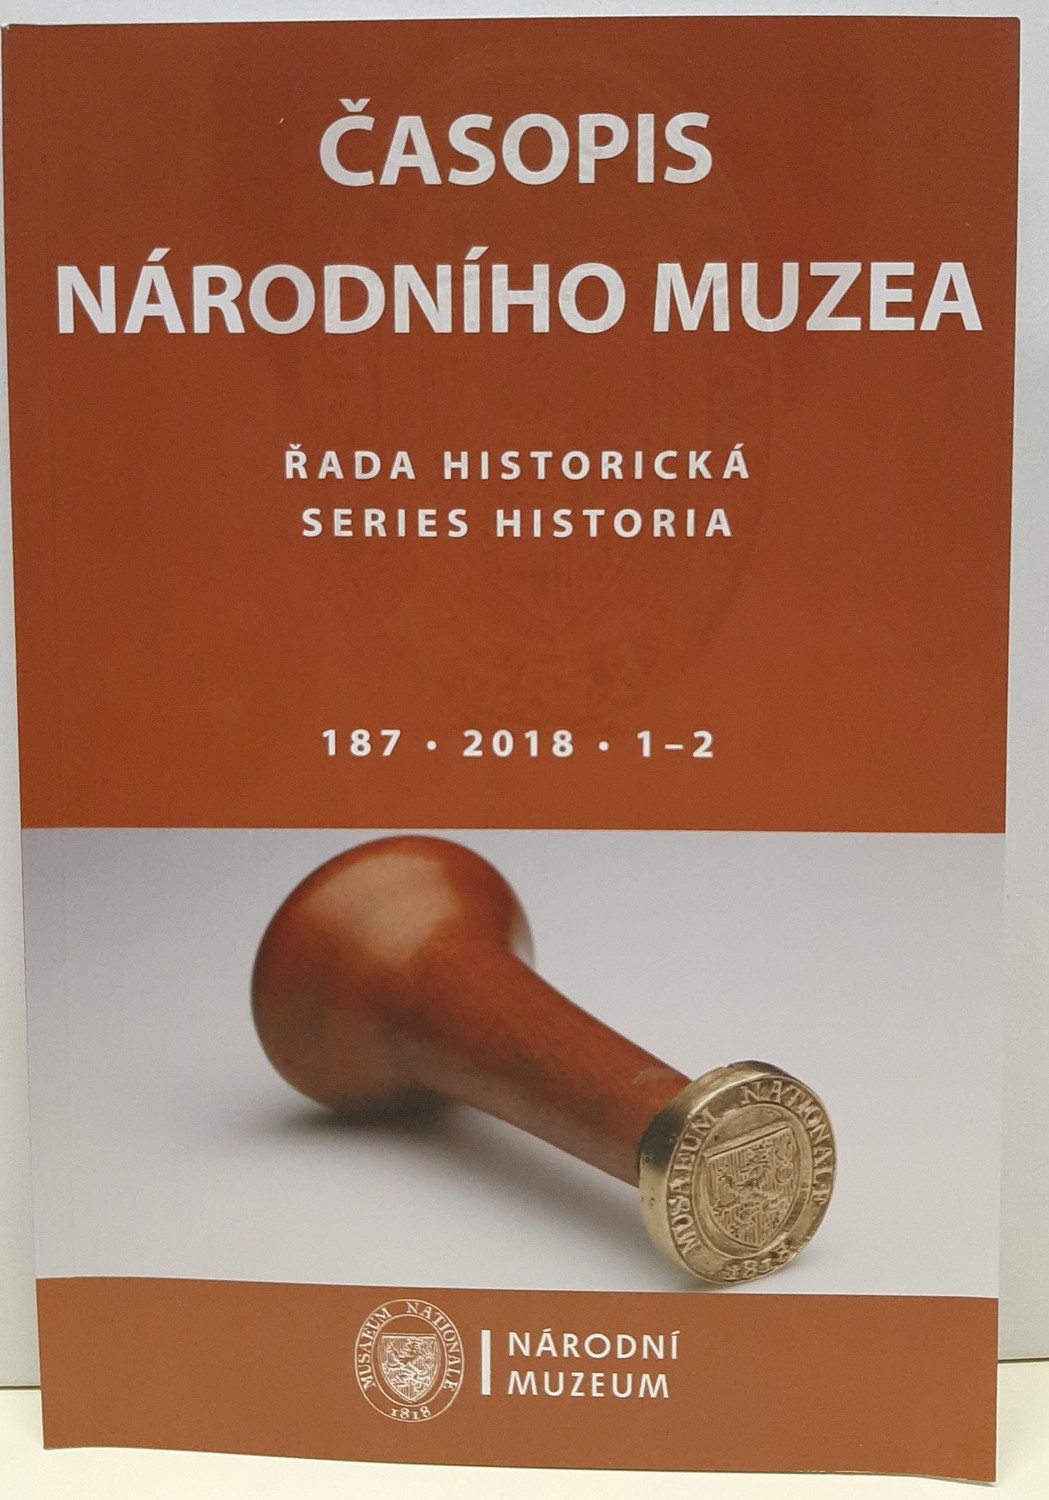 Casopis Národního muzea. Rada historická 2018/187. évf. 1-2. sz. (Rippl-Rónai Múzeum CC BY-NC-ND)